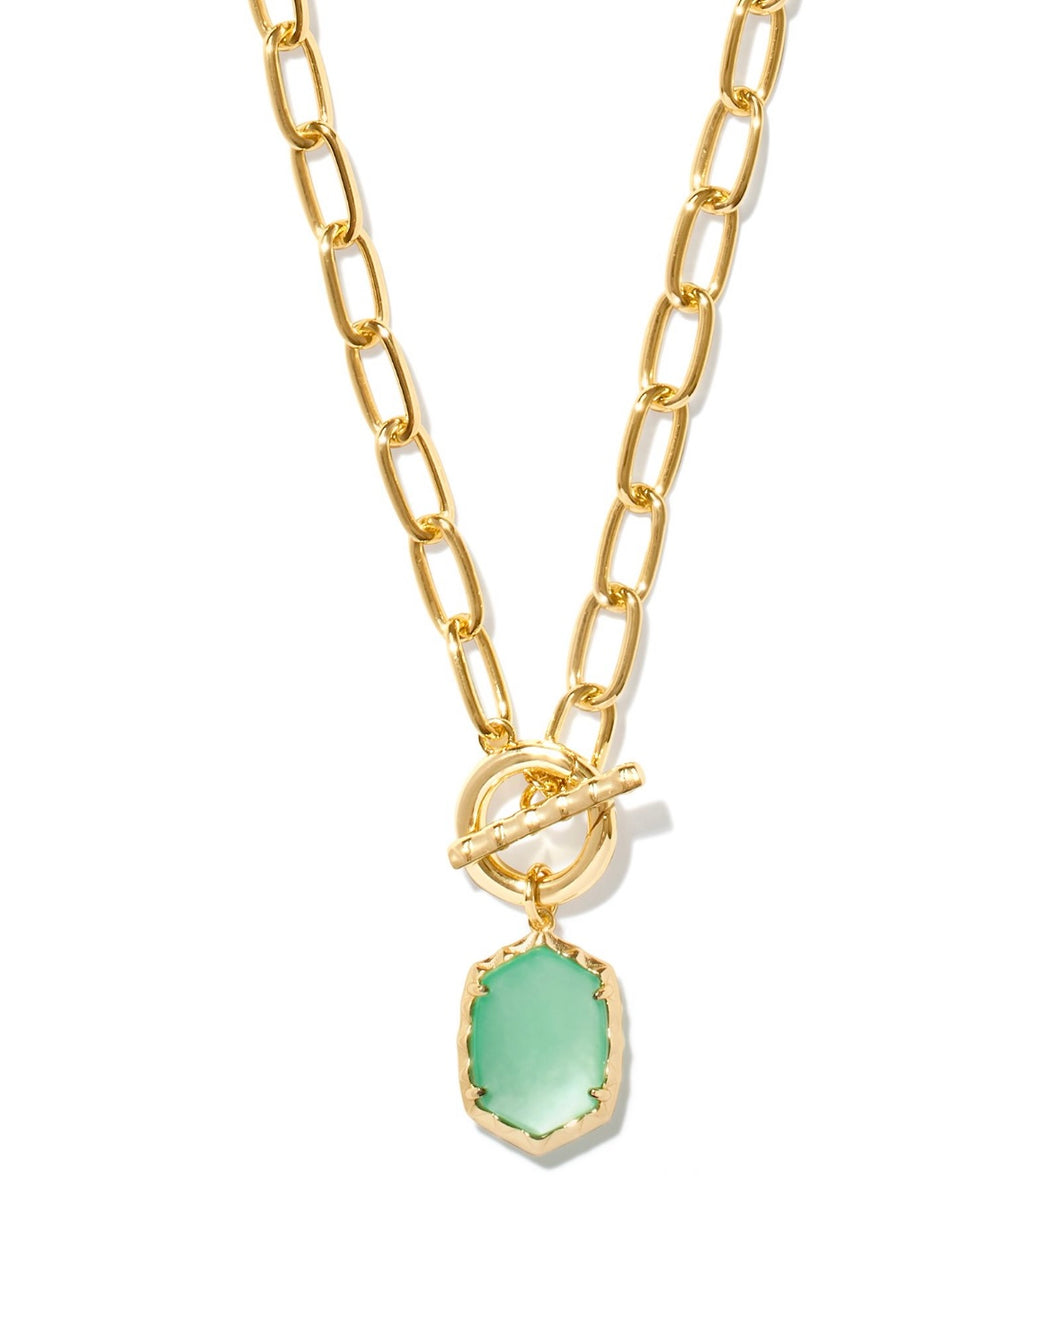 Kendra Scott: Daphne Link Chain Necklace in Gold Light Green MOP